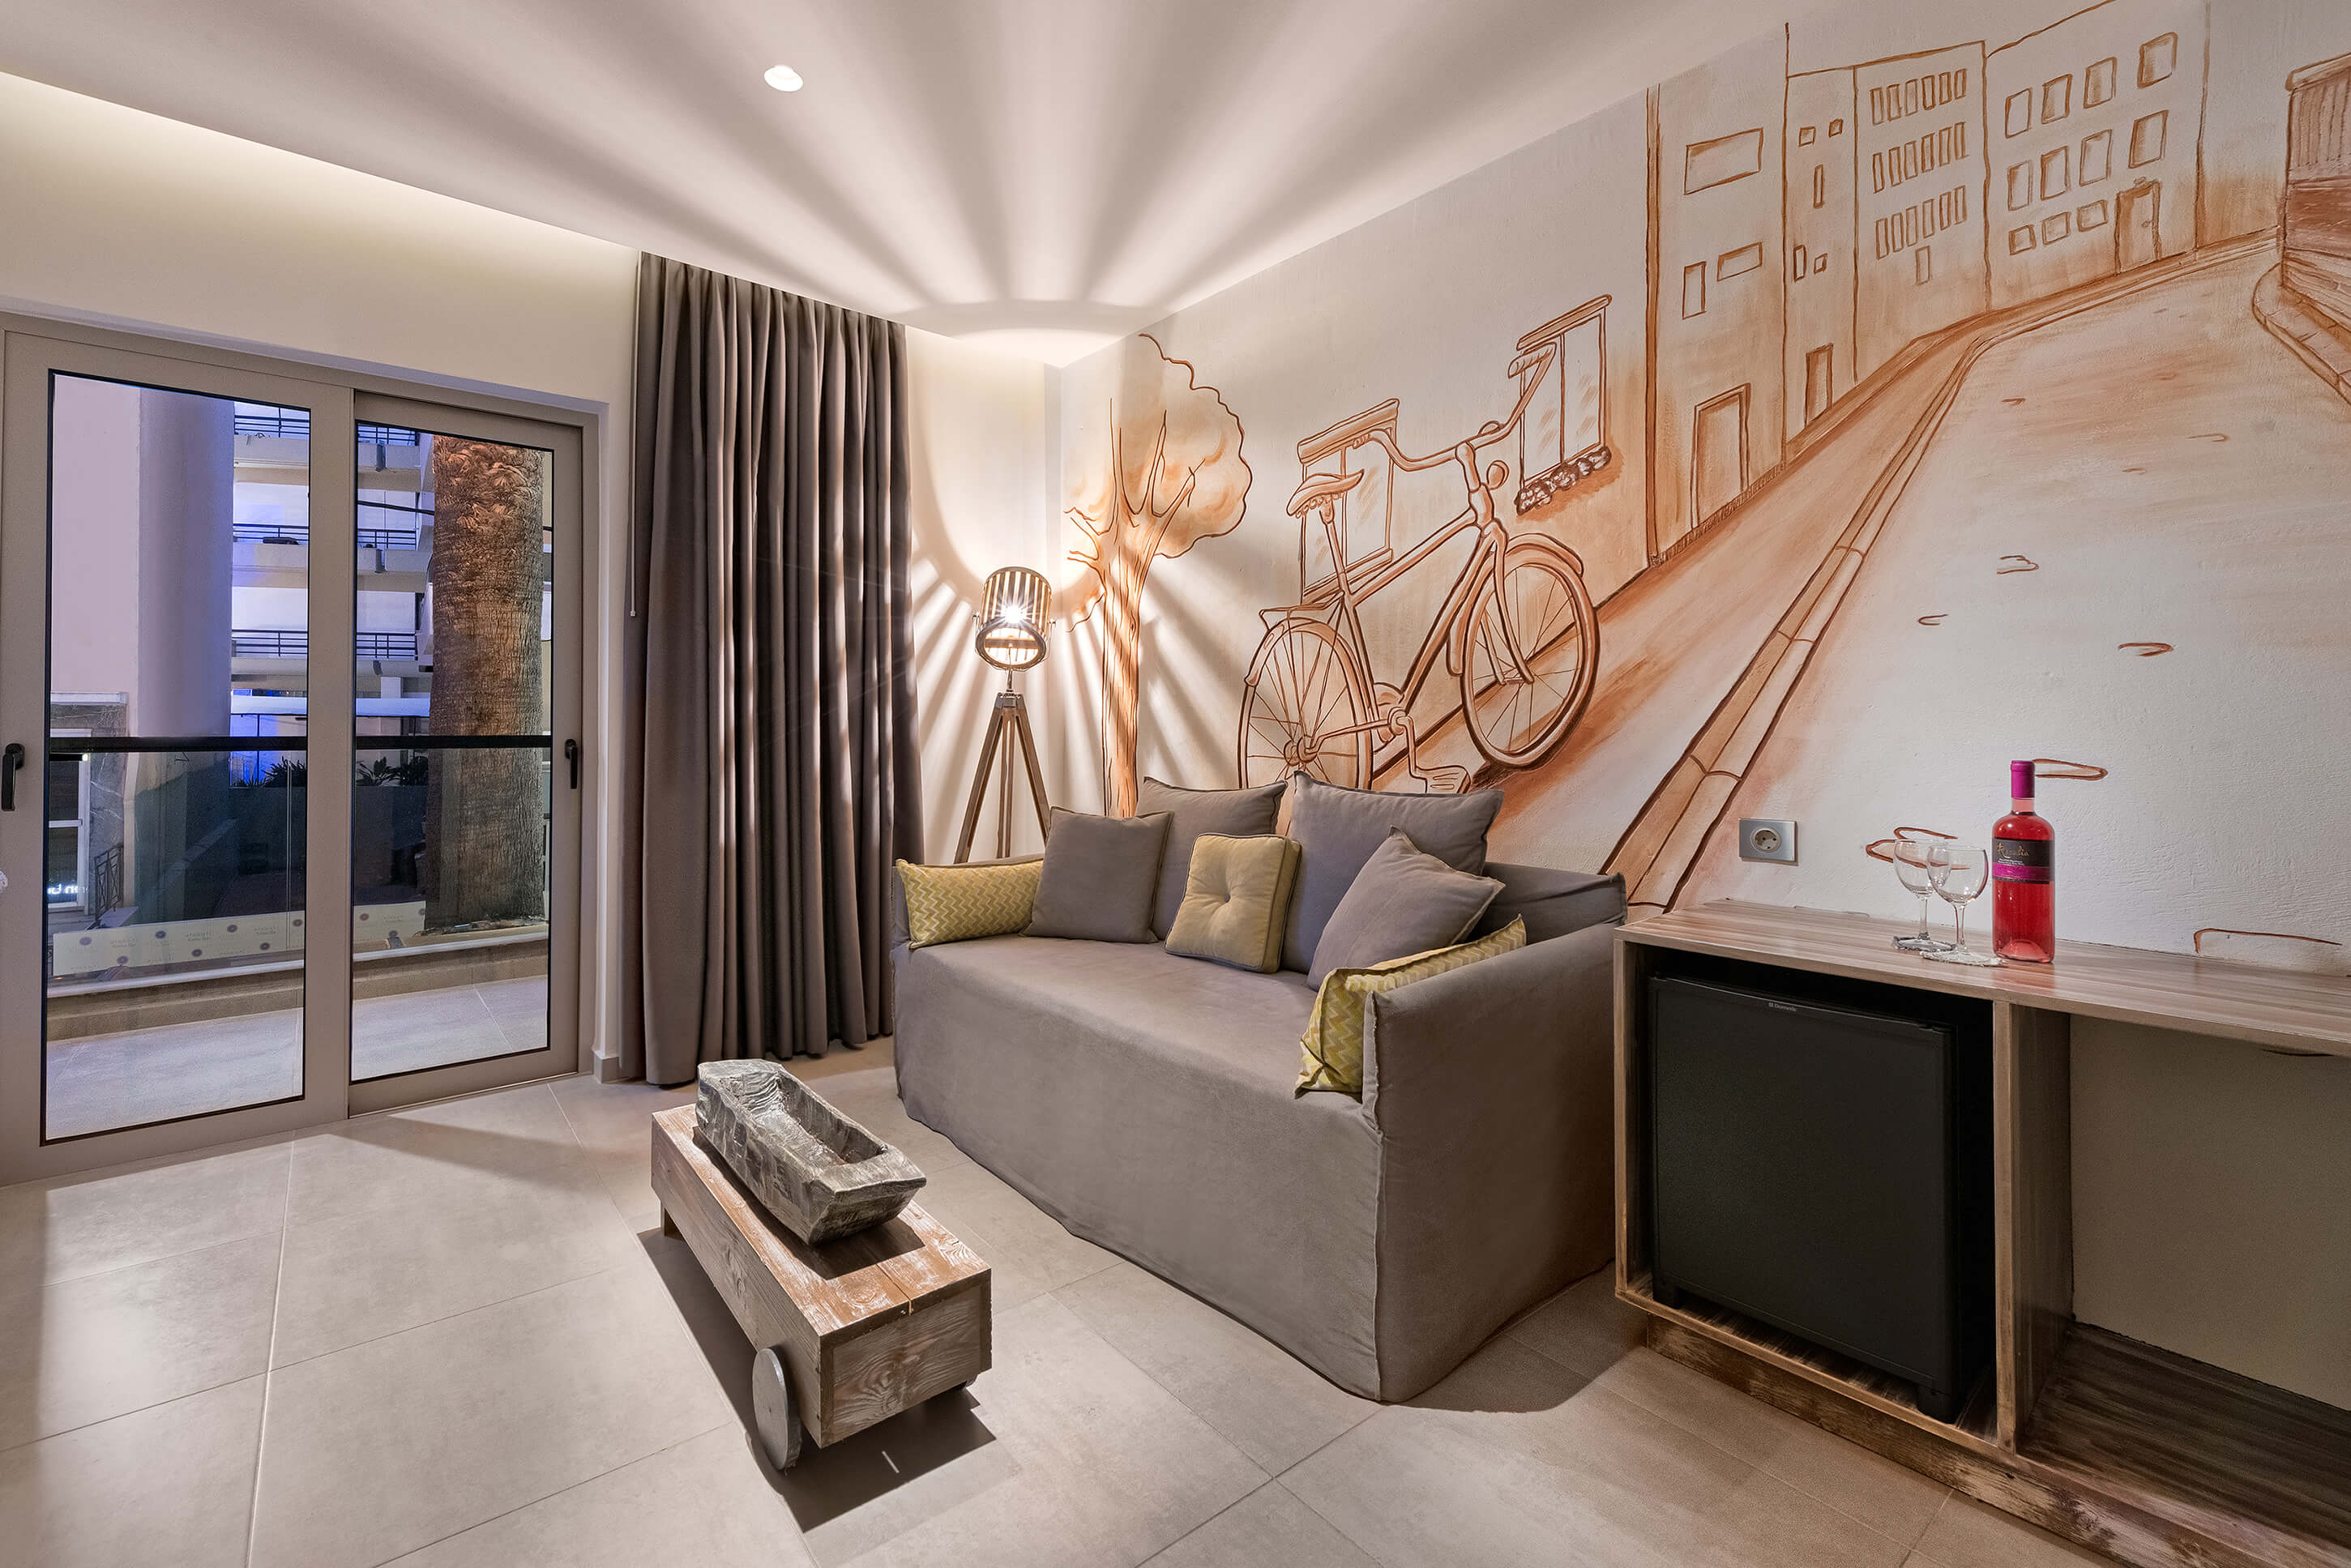 Aspalathos Suite Living Room - Elakati Luxury Boutique Hotel in Rhodes